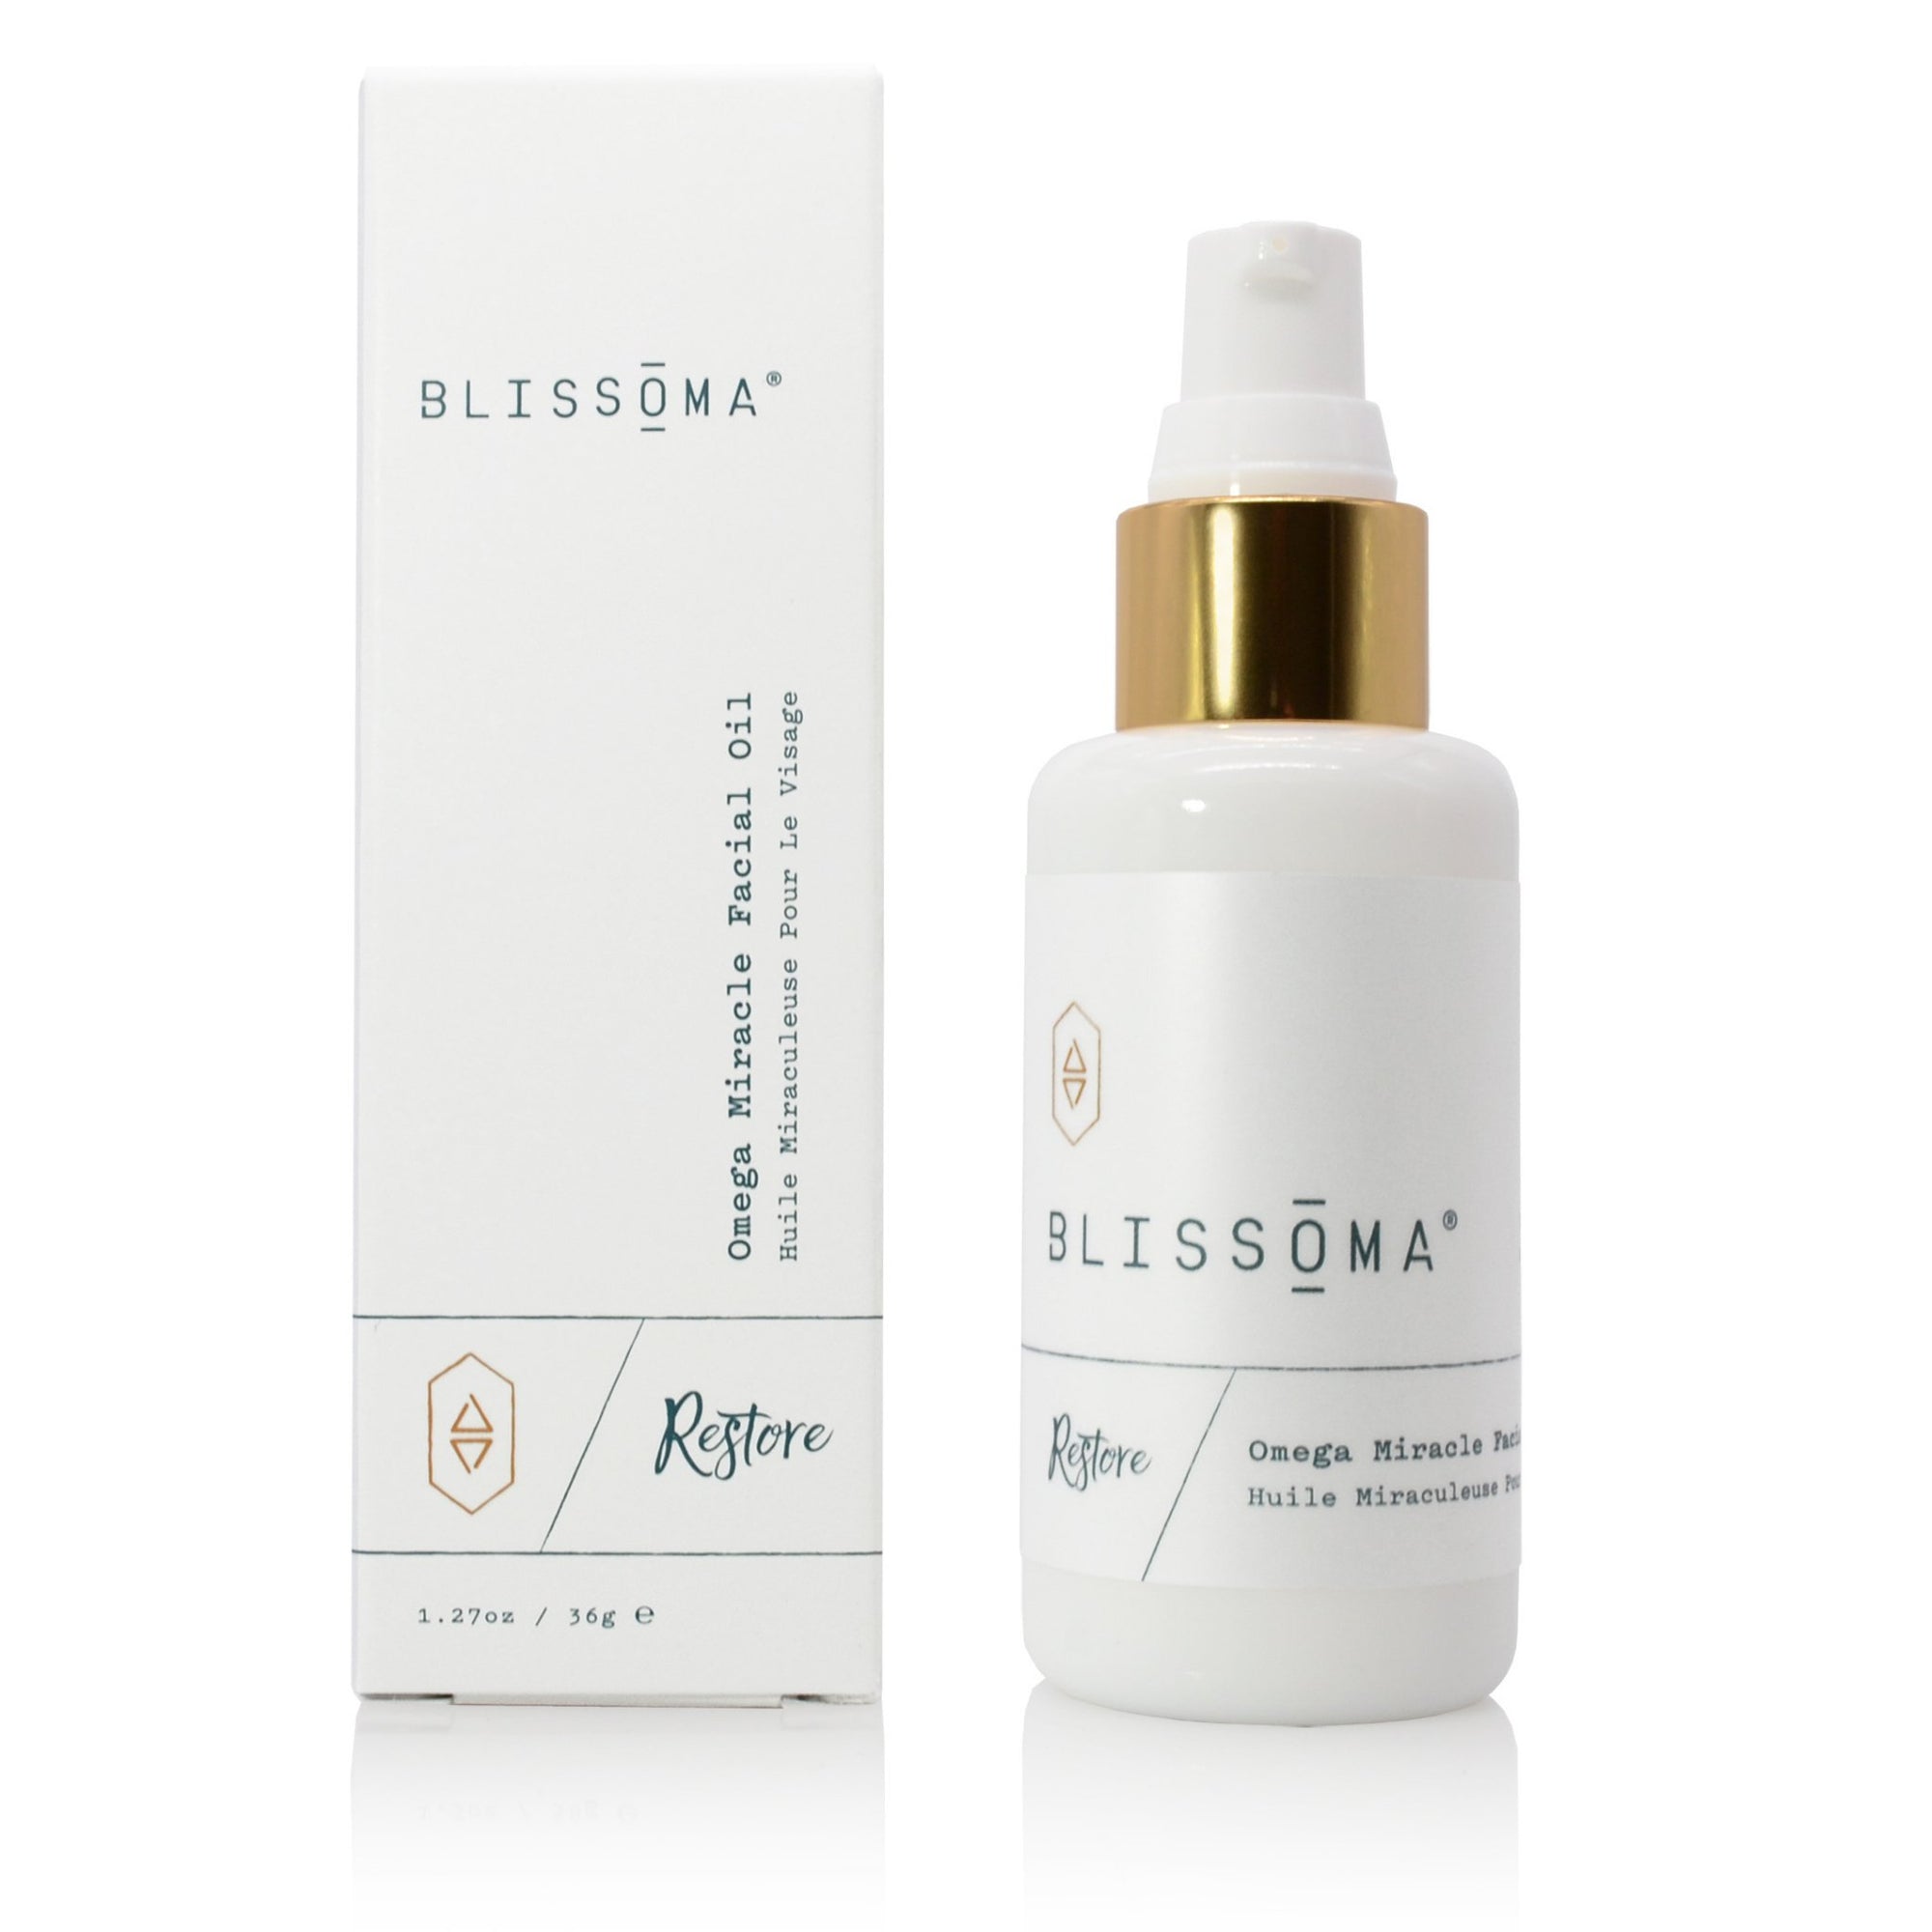 Blissoma - Blissoma Restore Omega Facial Oil - ORESTA clean beauty simplified